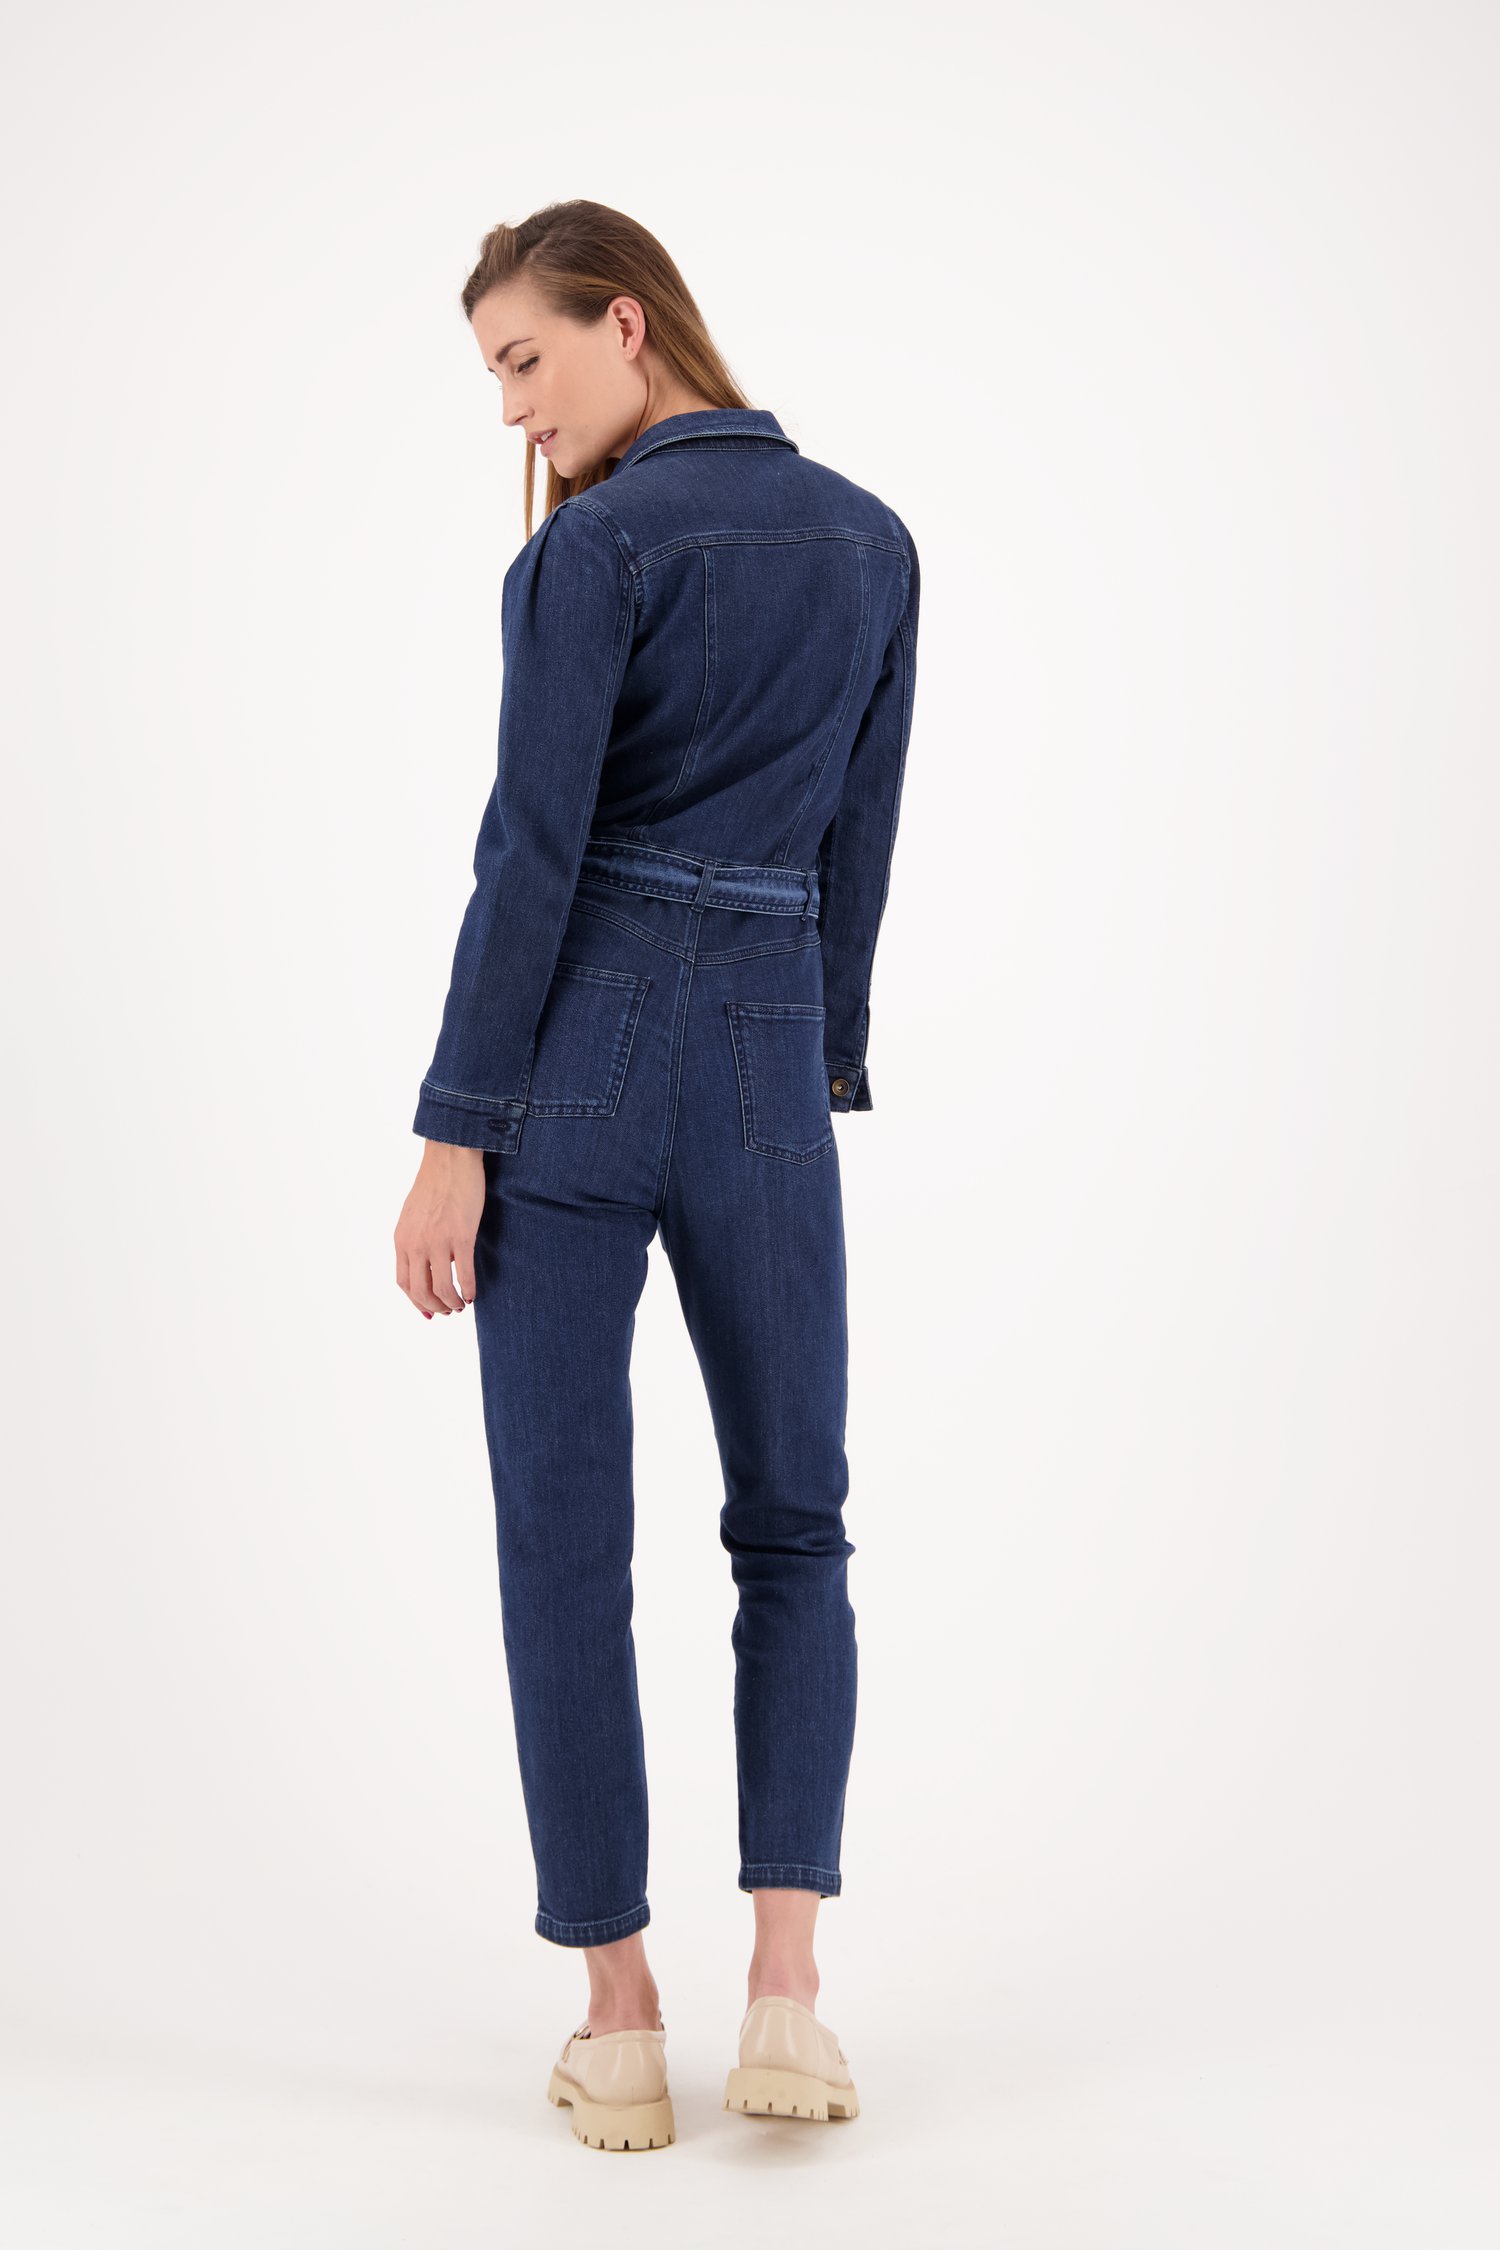 Blauwe jeans jumpsuit  van Louise voor Dames